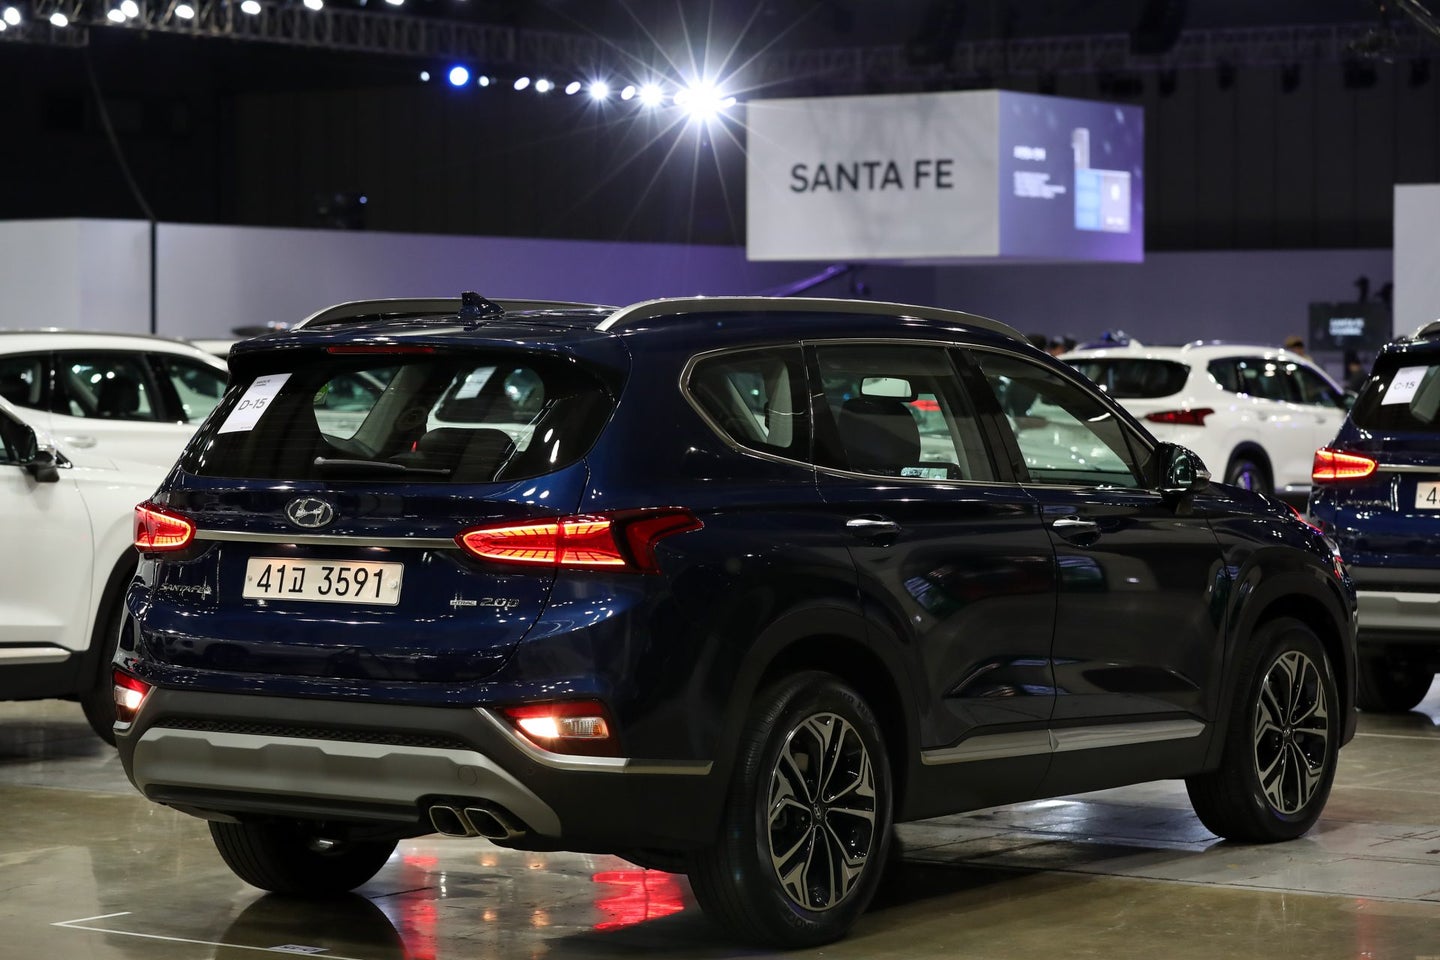 Hyundai Motor Co. Unveils New Model Of Santa Fe SUV